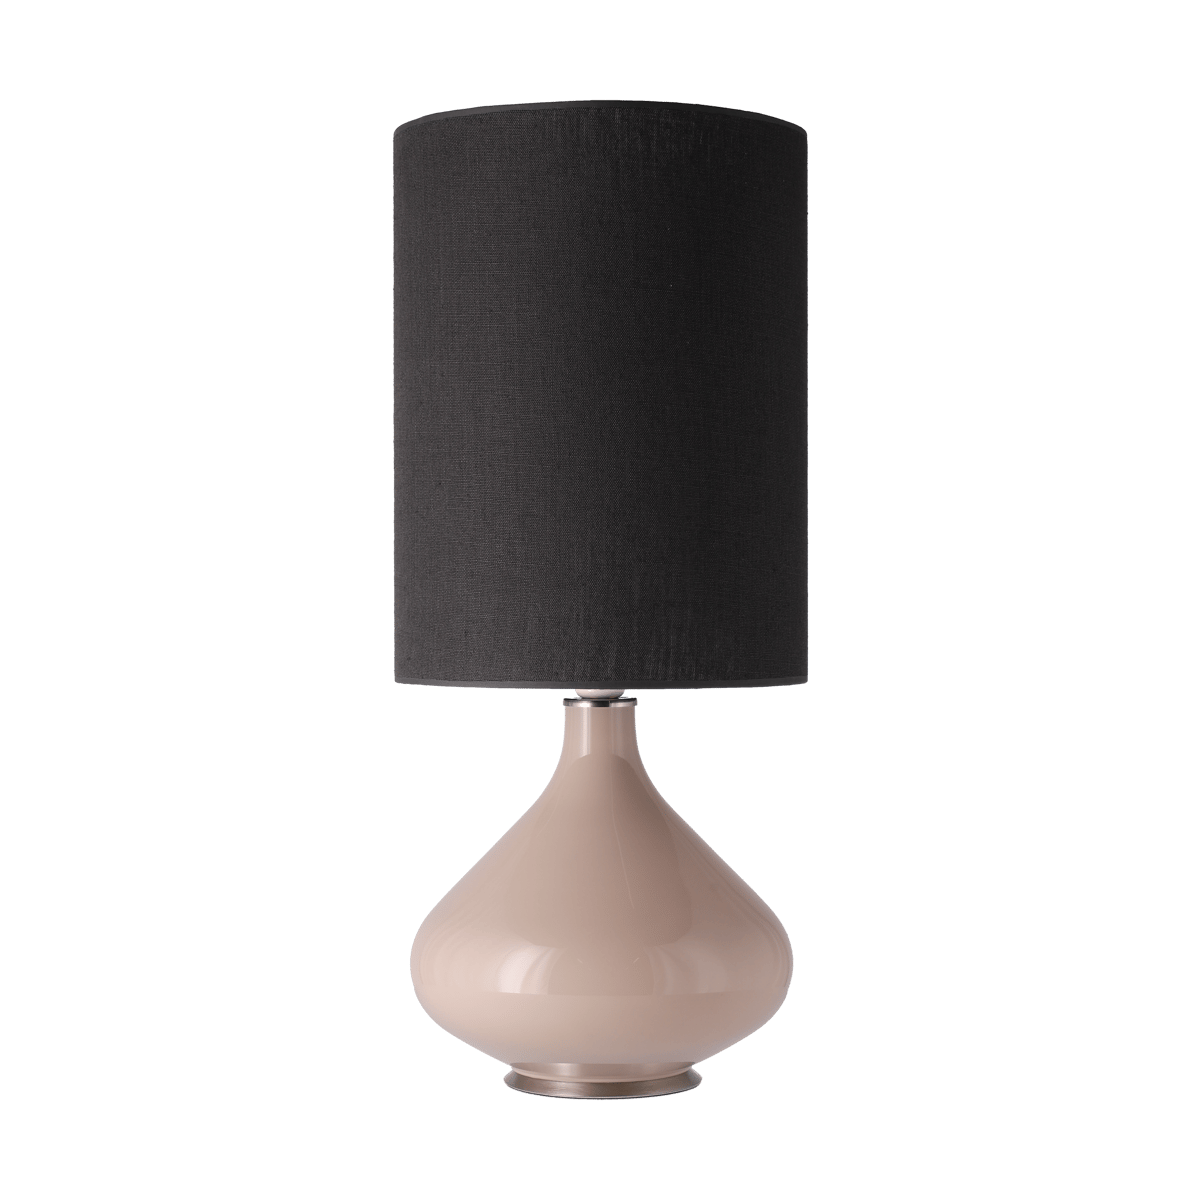 Flavia Lamps Flavia tafellamp beige lampvoet Lino Negro L